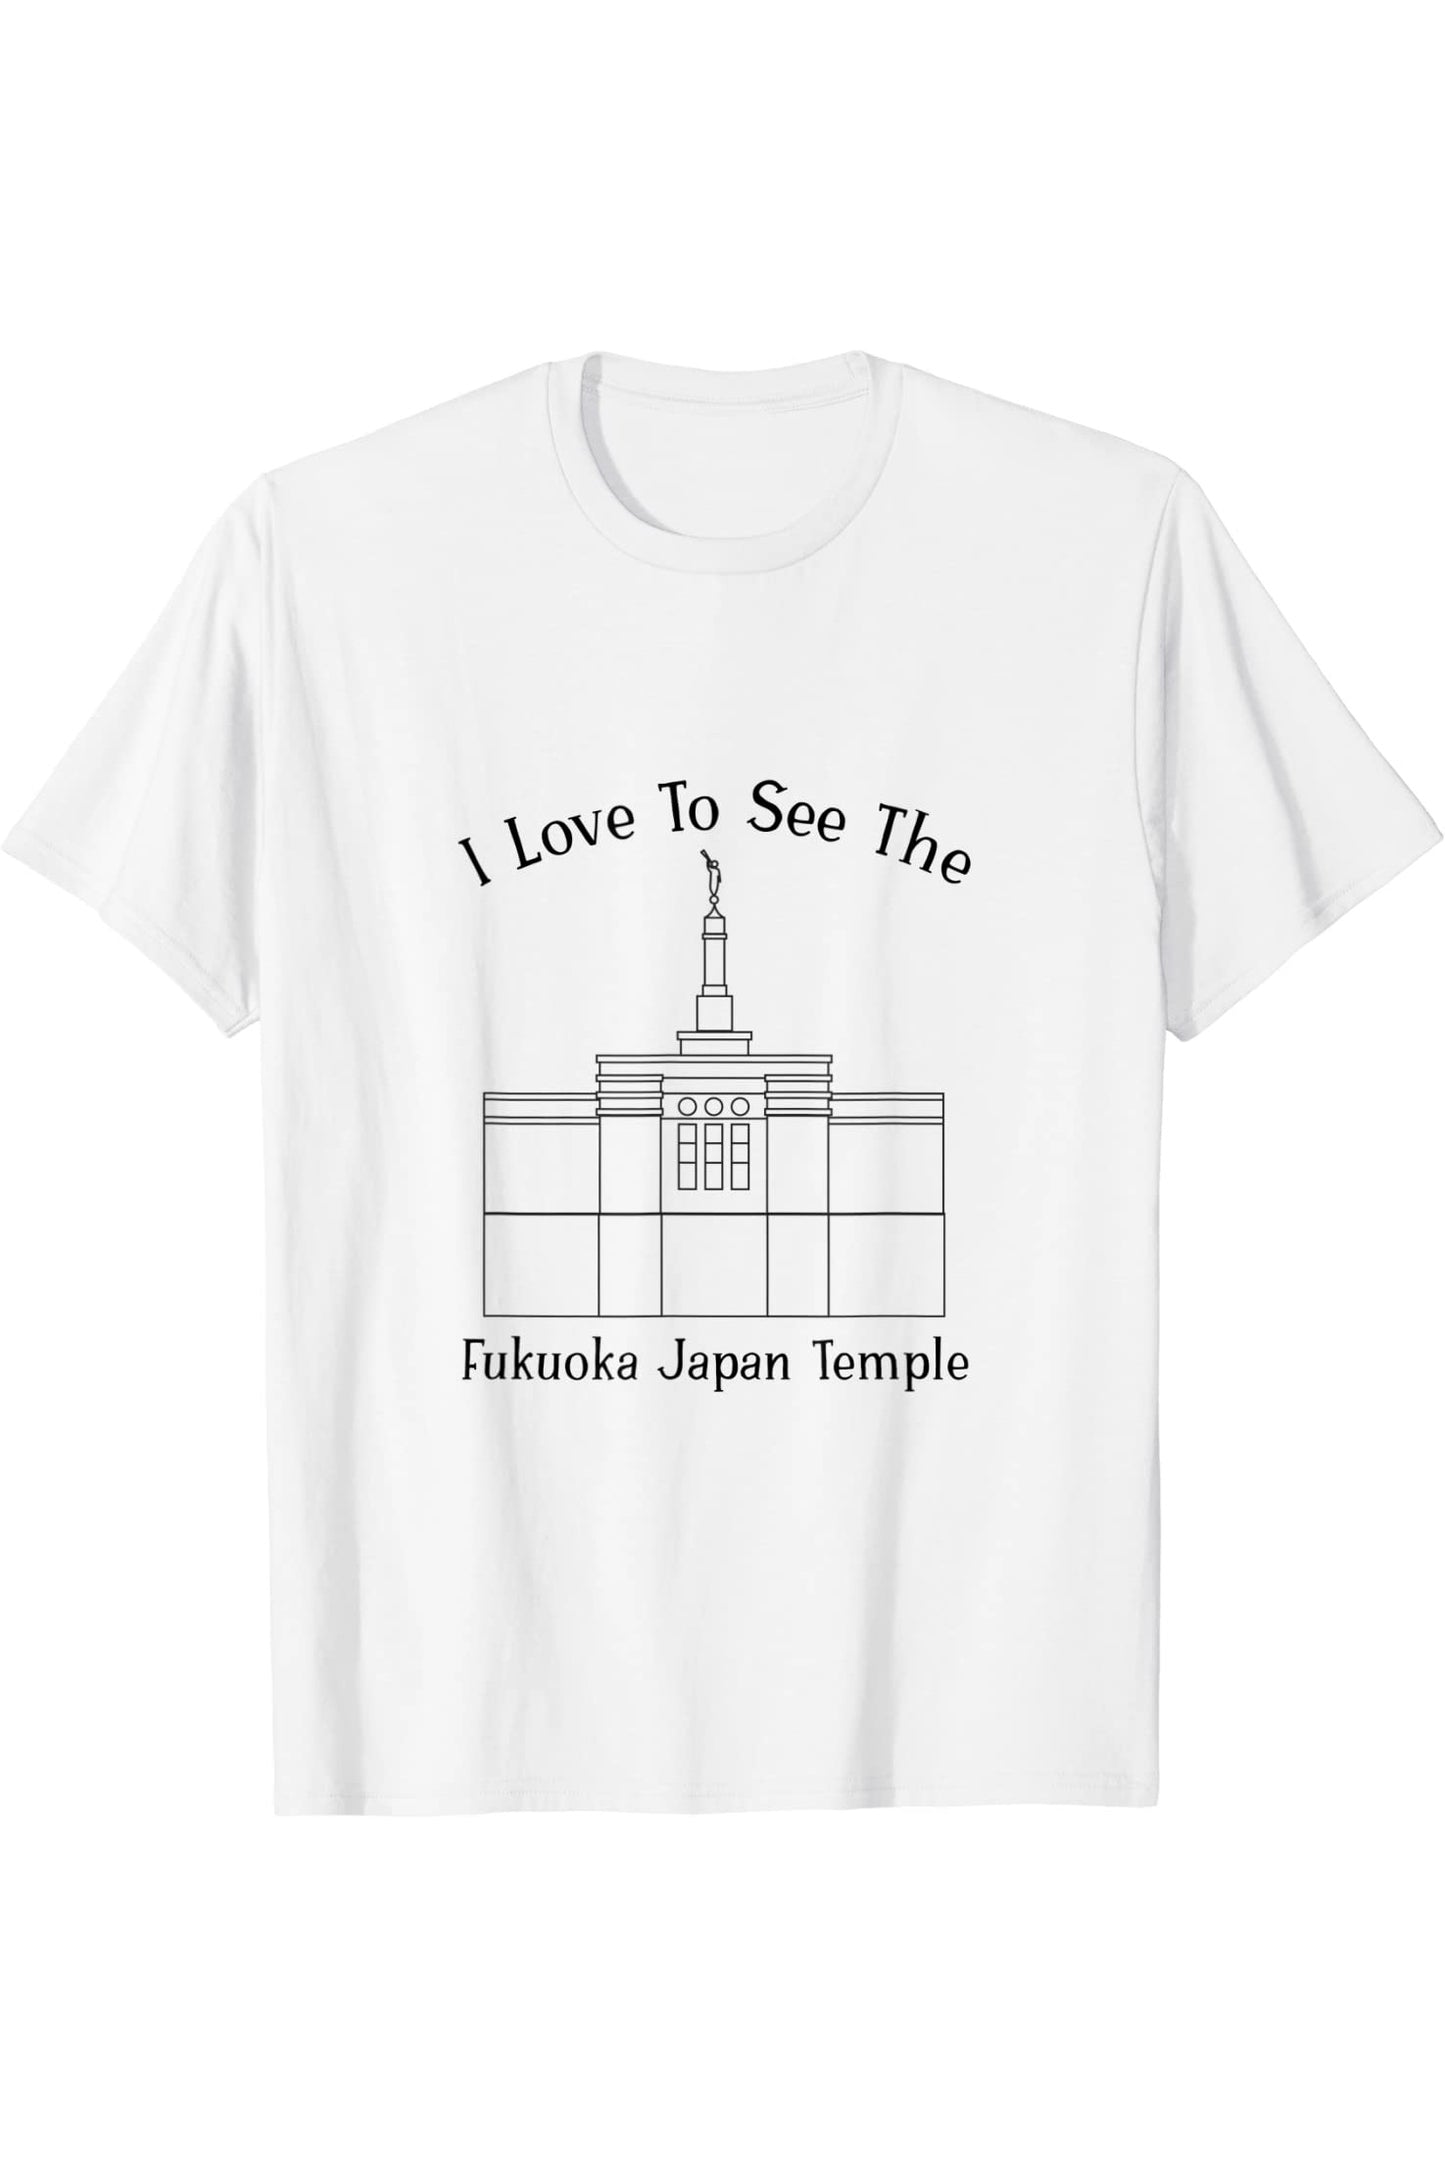 Fukuoka Japan Temple T-Shirt - Happy Style (English) US